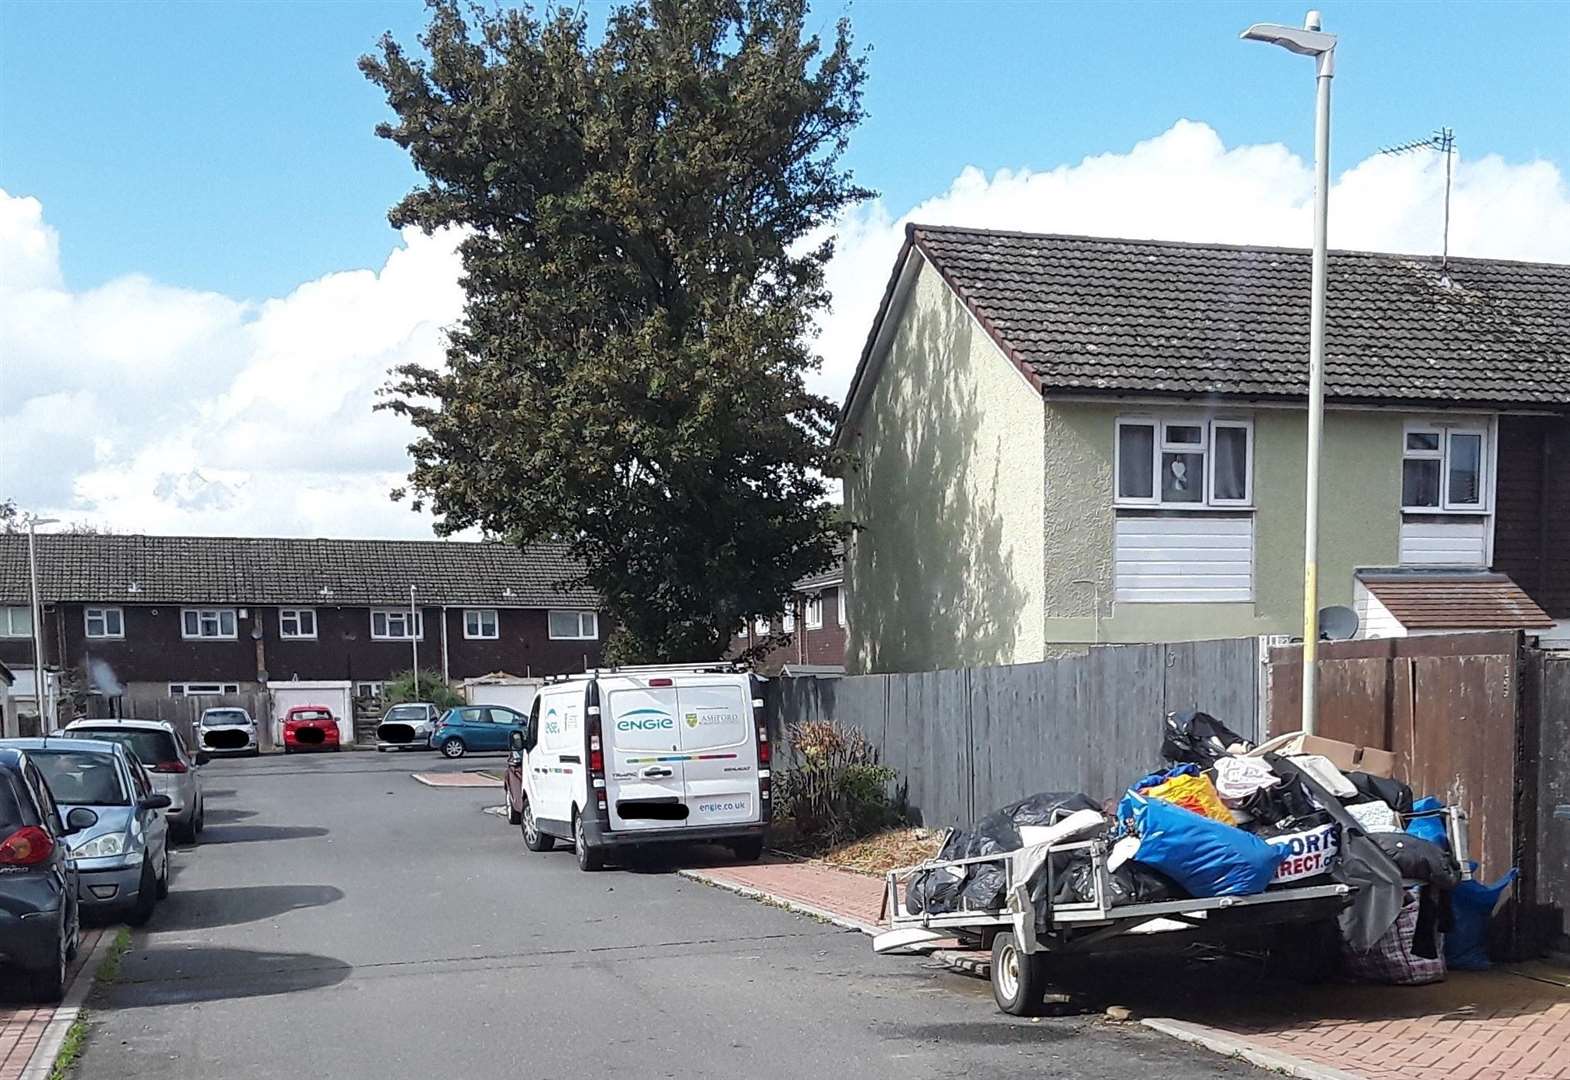 The trailer of waste left in Kilndown Close. Photo: Ashford Borough Council